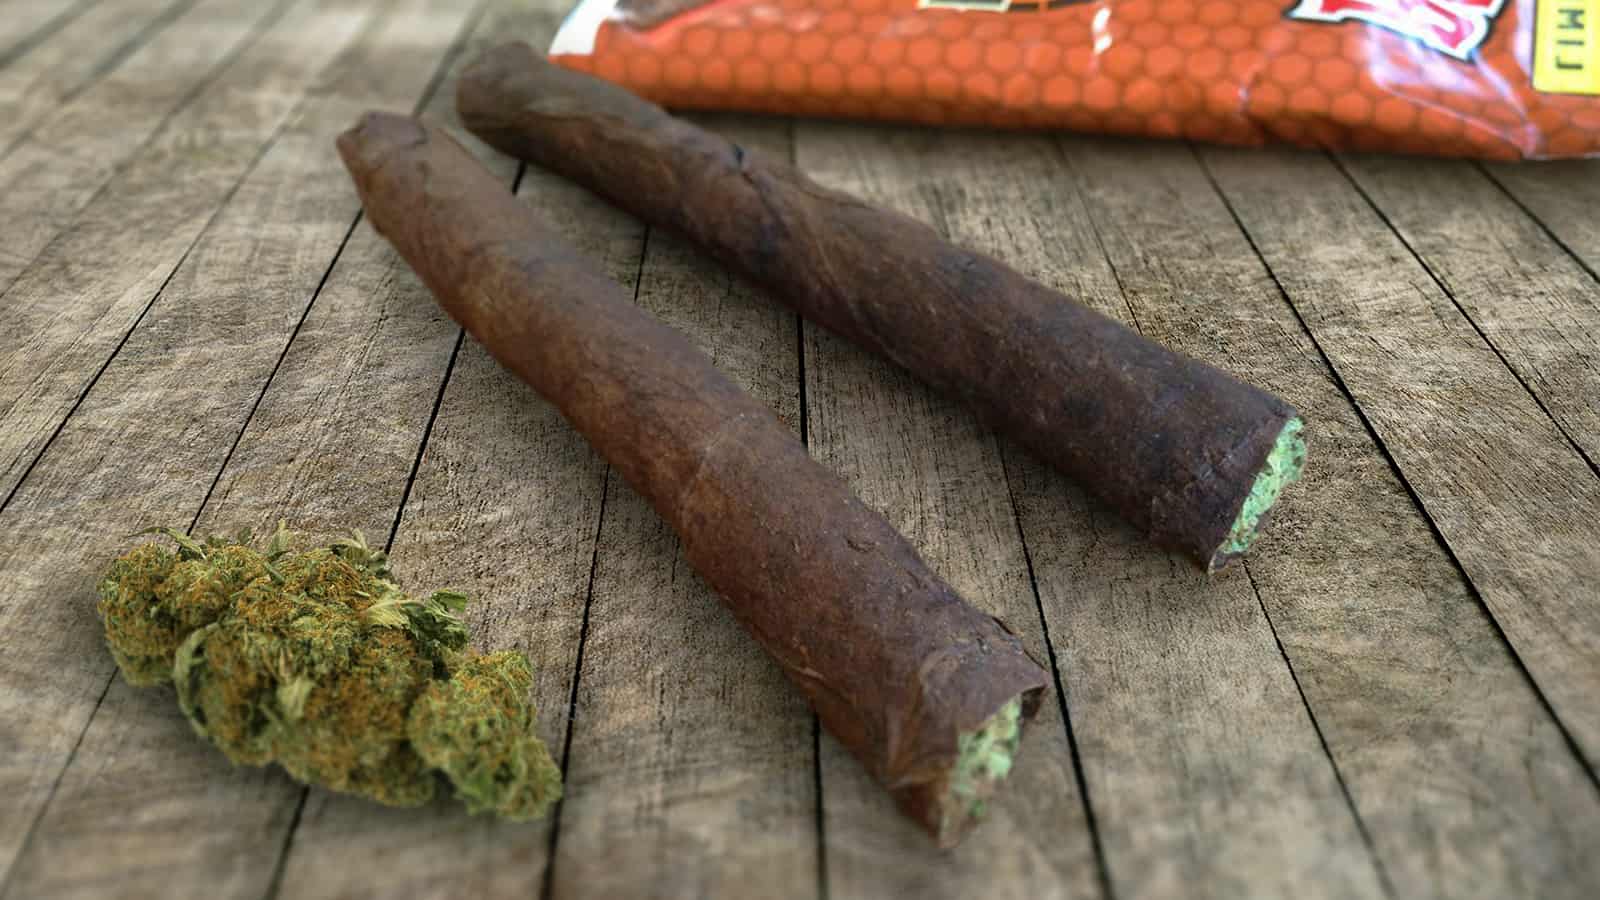 weed dispensary halifax smoke bar delivery cannabis halifax